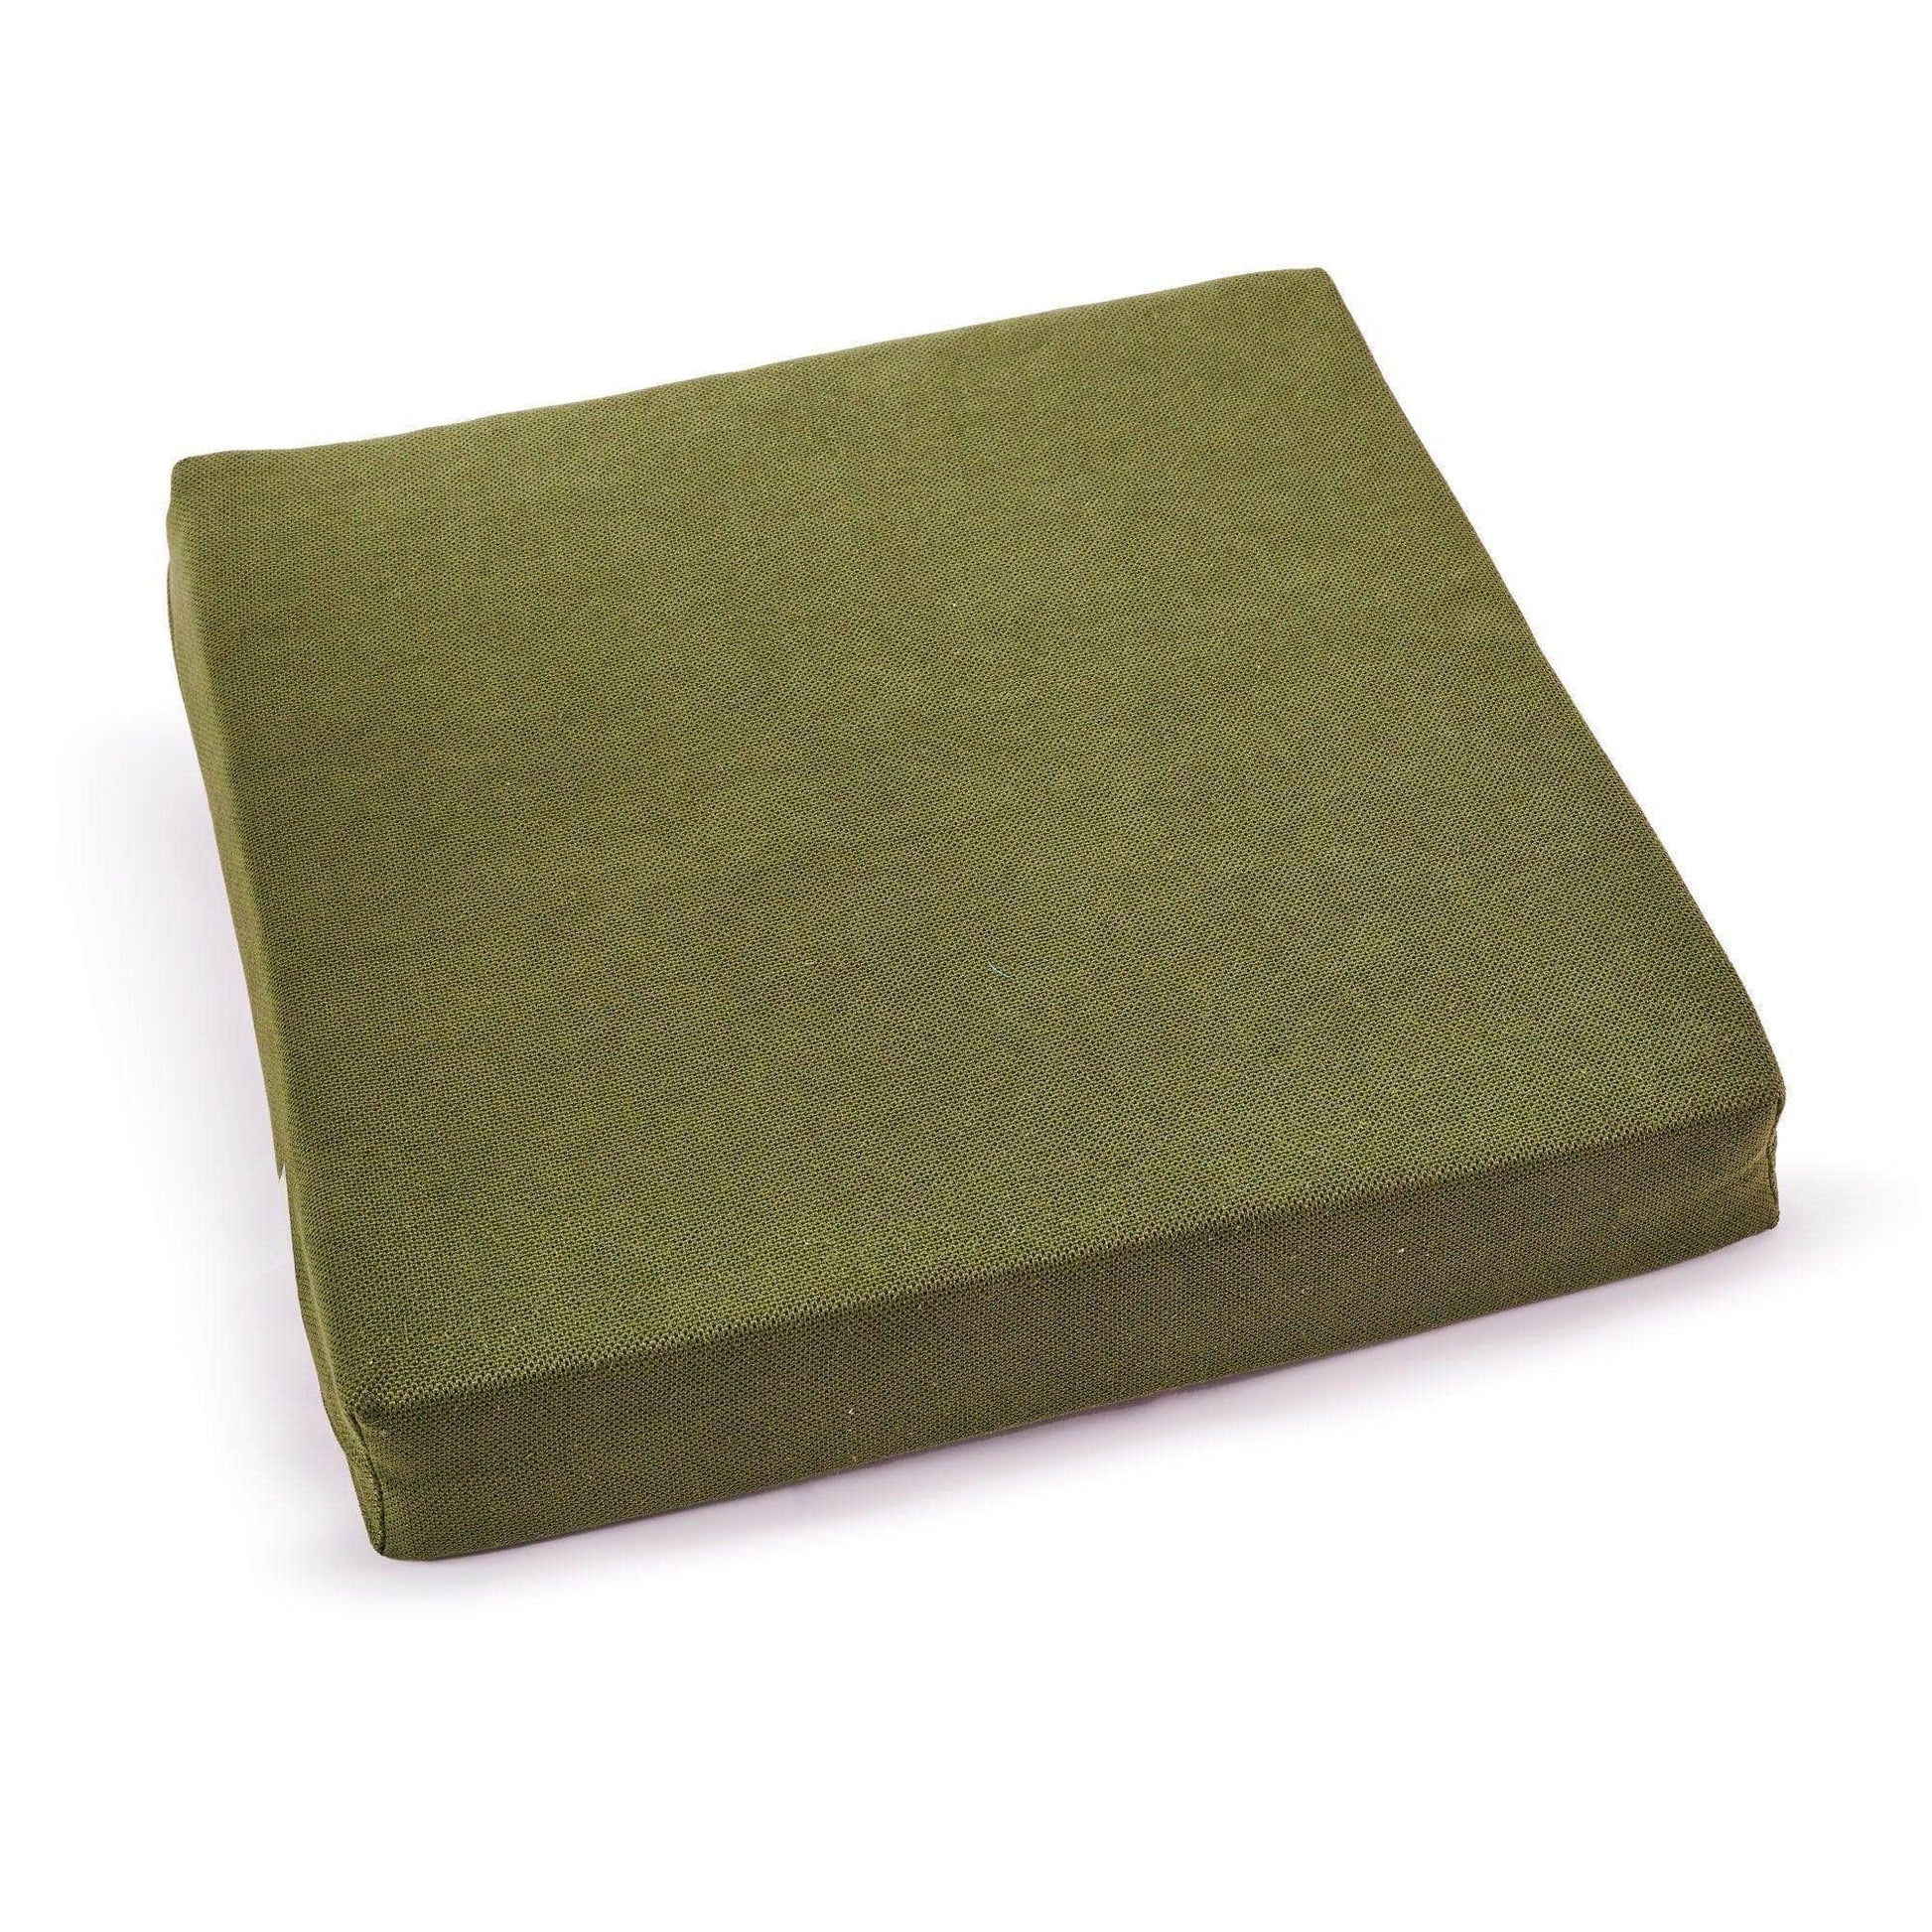 Penguin Group Cushions Oil Green Square Sponge Cushion 50×52×8 cm